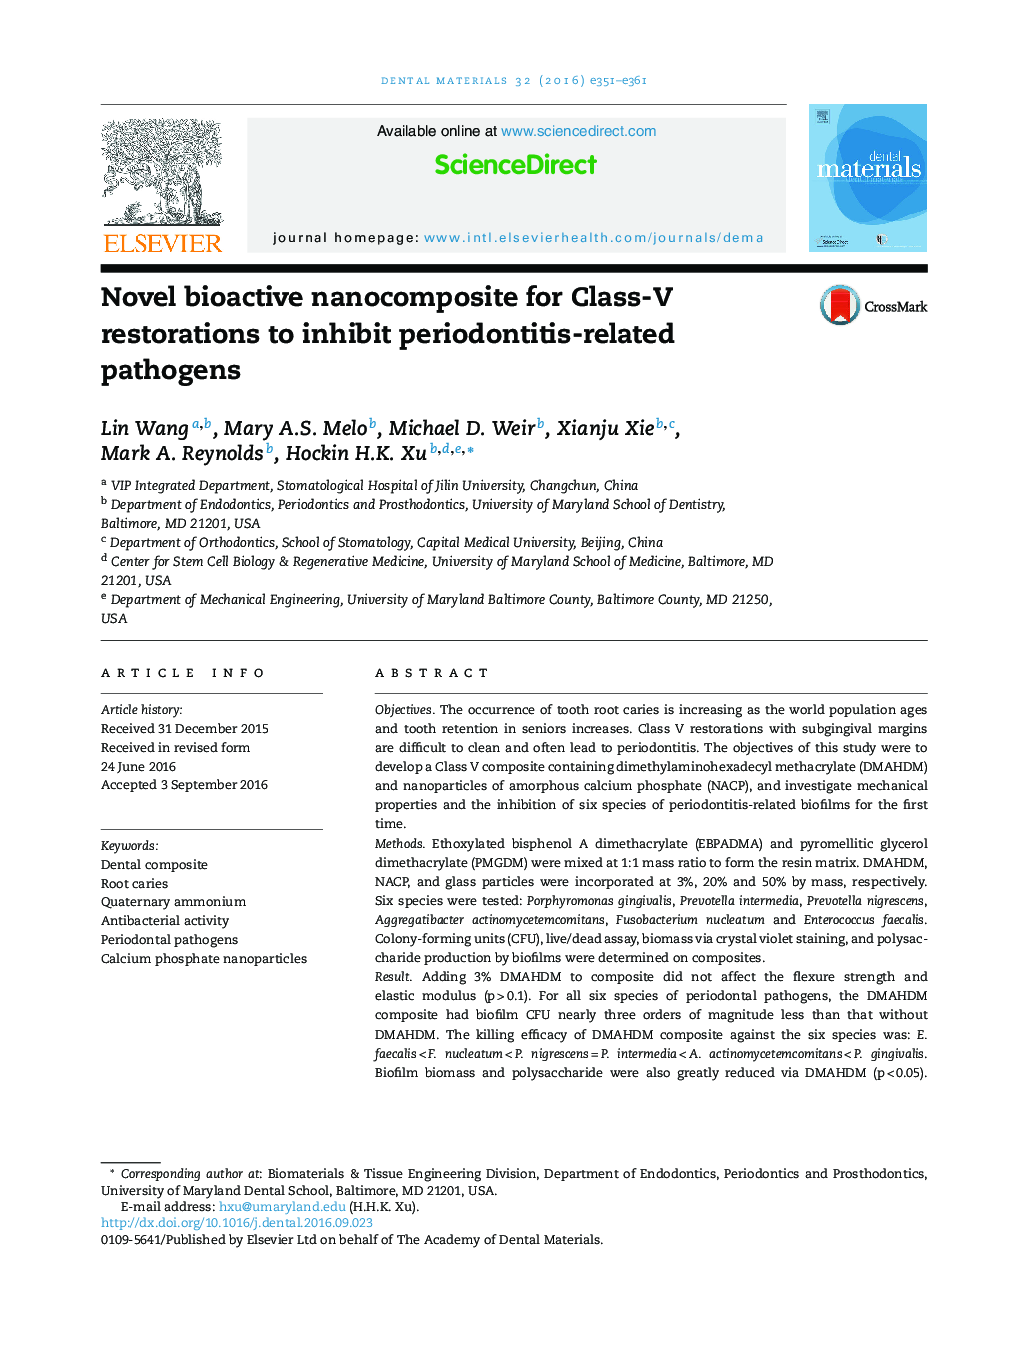 Novel bioactive nanocomposite for Class-V restorations to inhibit periodontitis-related pathogens